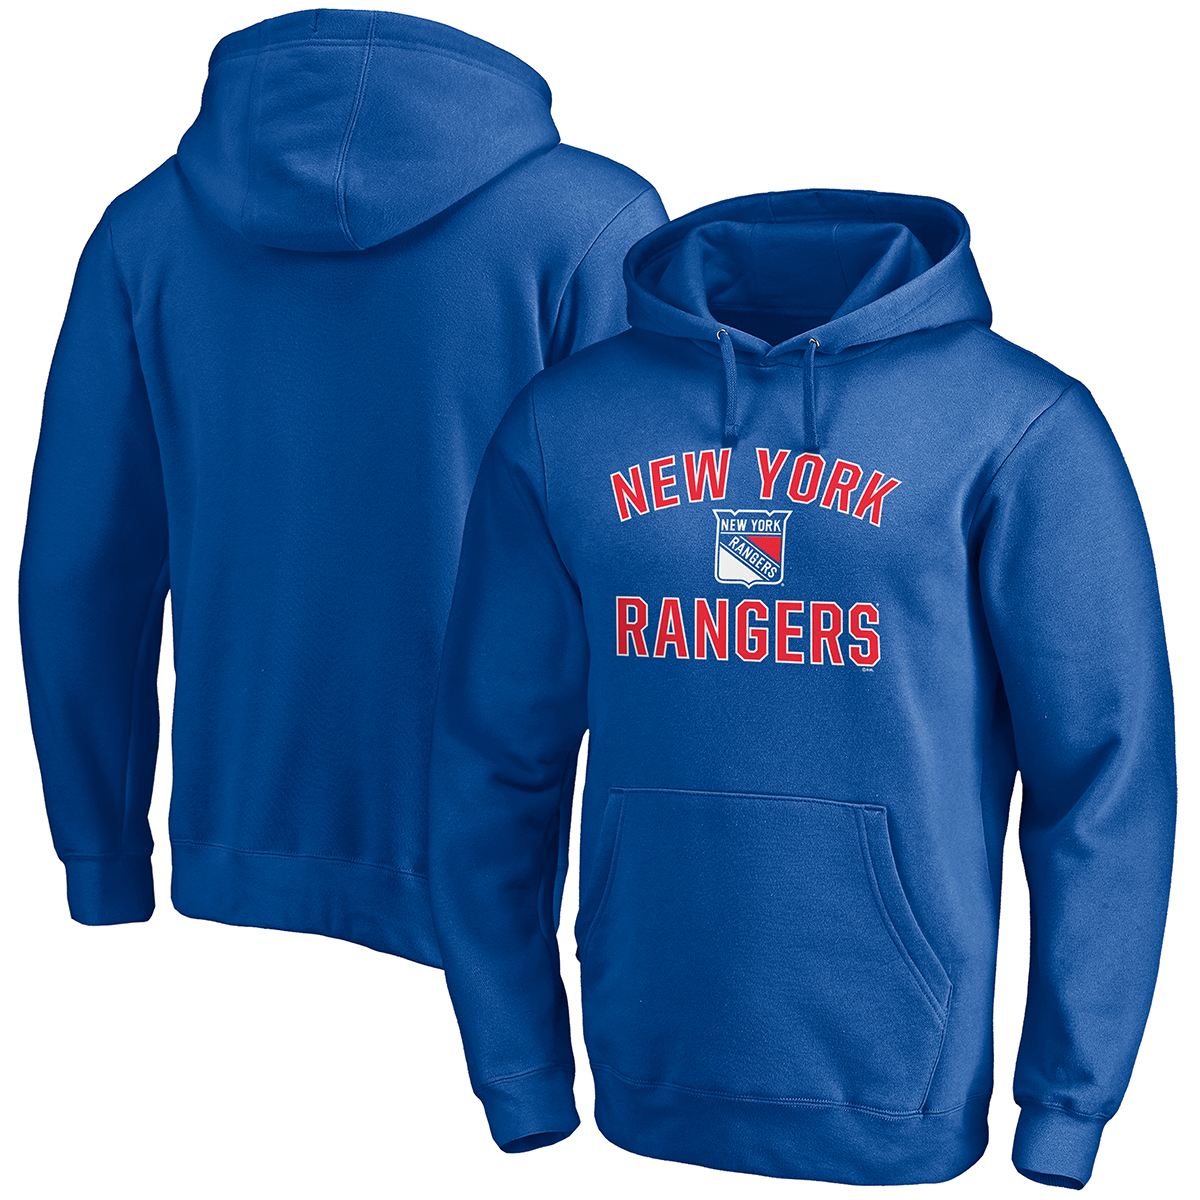 New York Rangers Men's Fanatics Victory Arch Pullover Hoodie